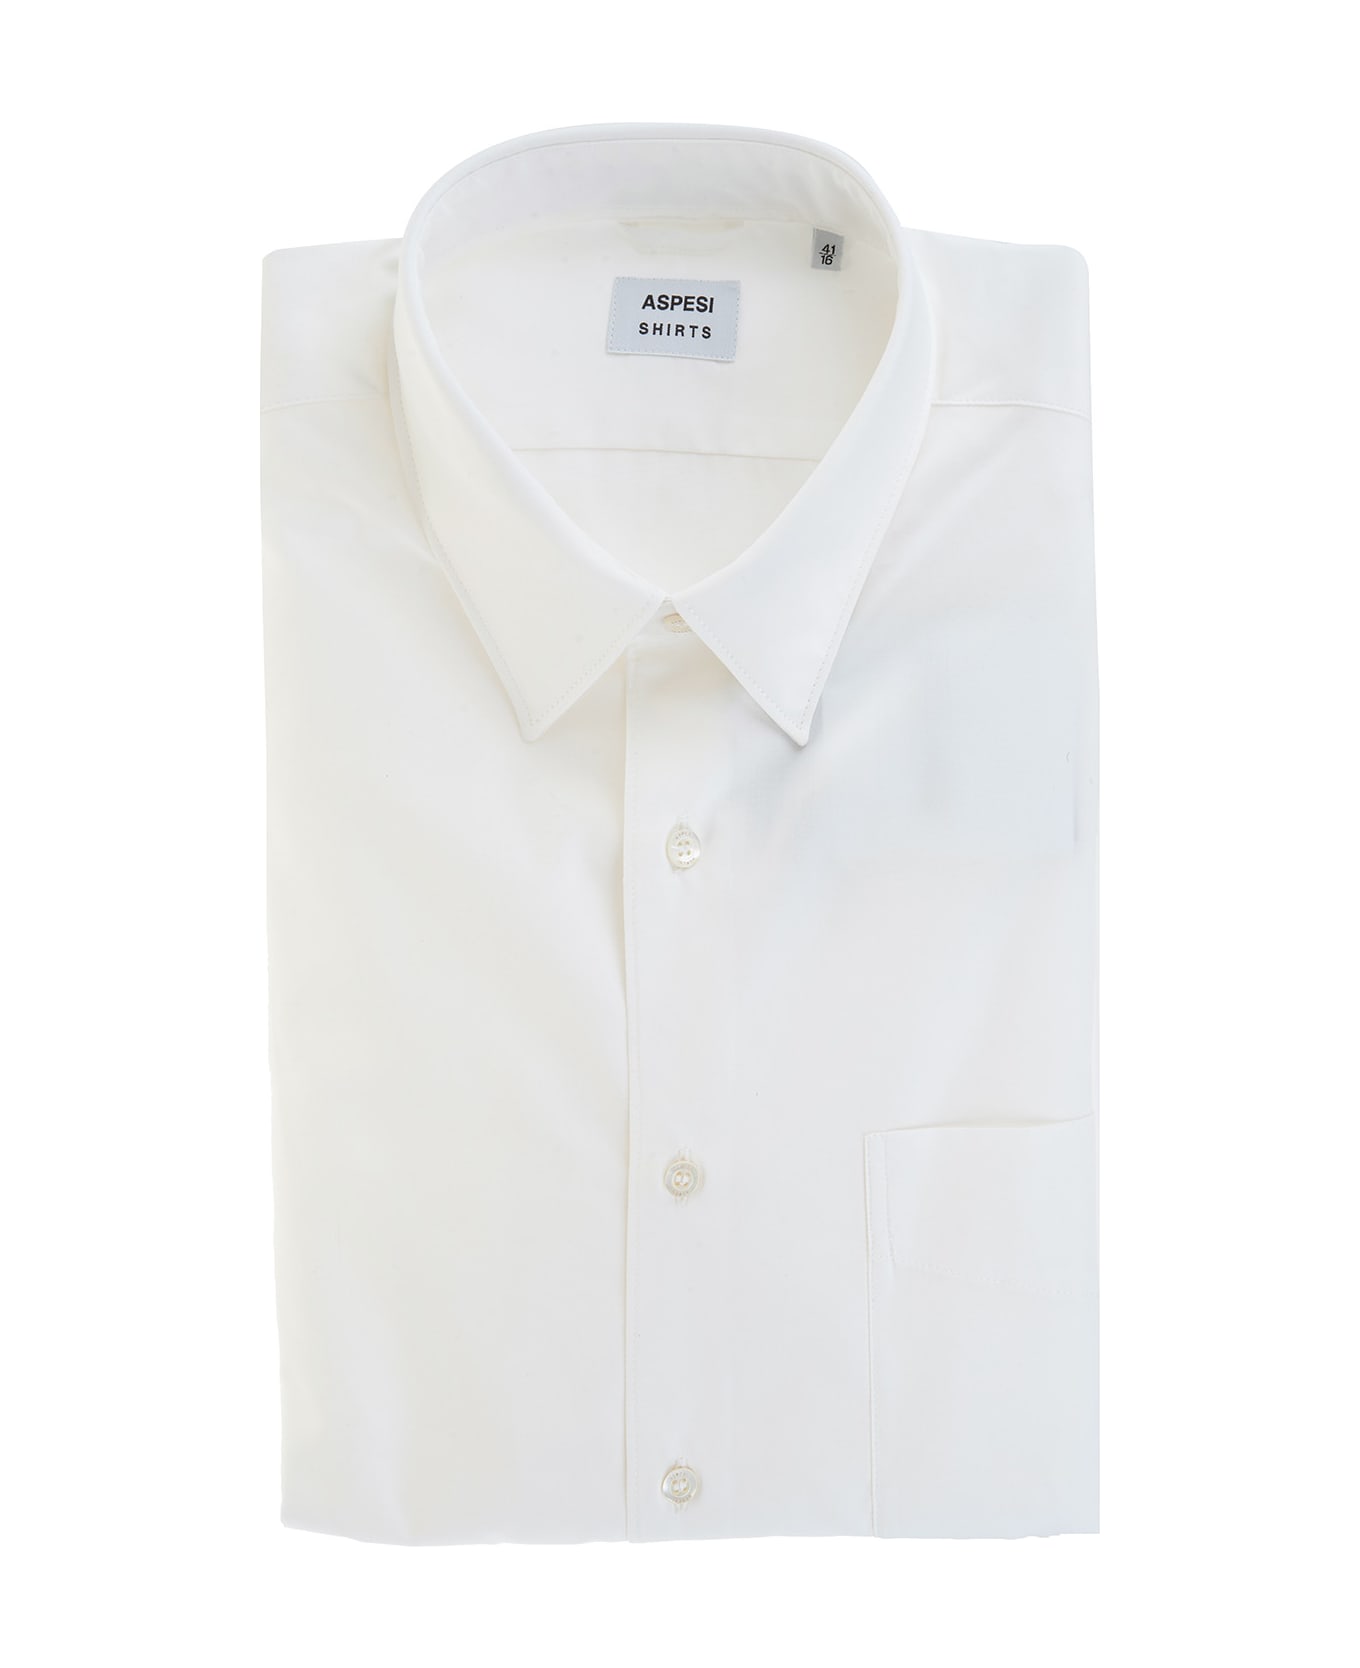 Aspesi Classic Shirt In White Cotton Poplin - Bianco シャツ